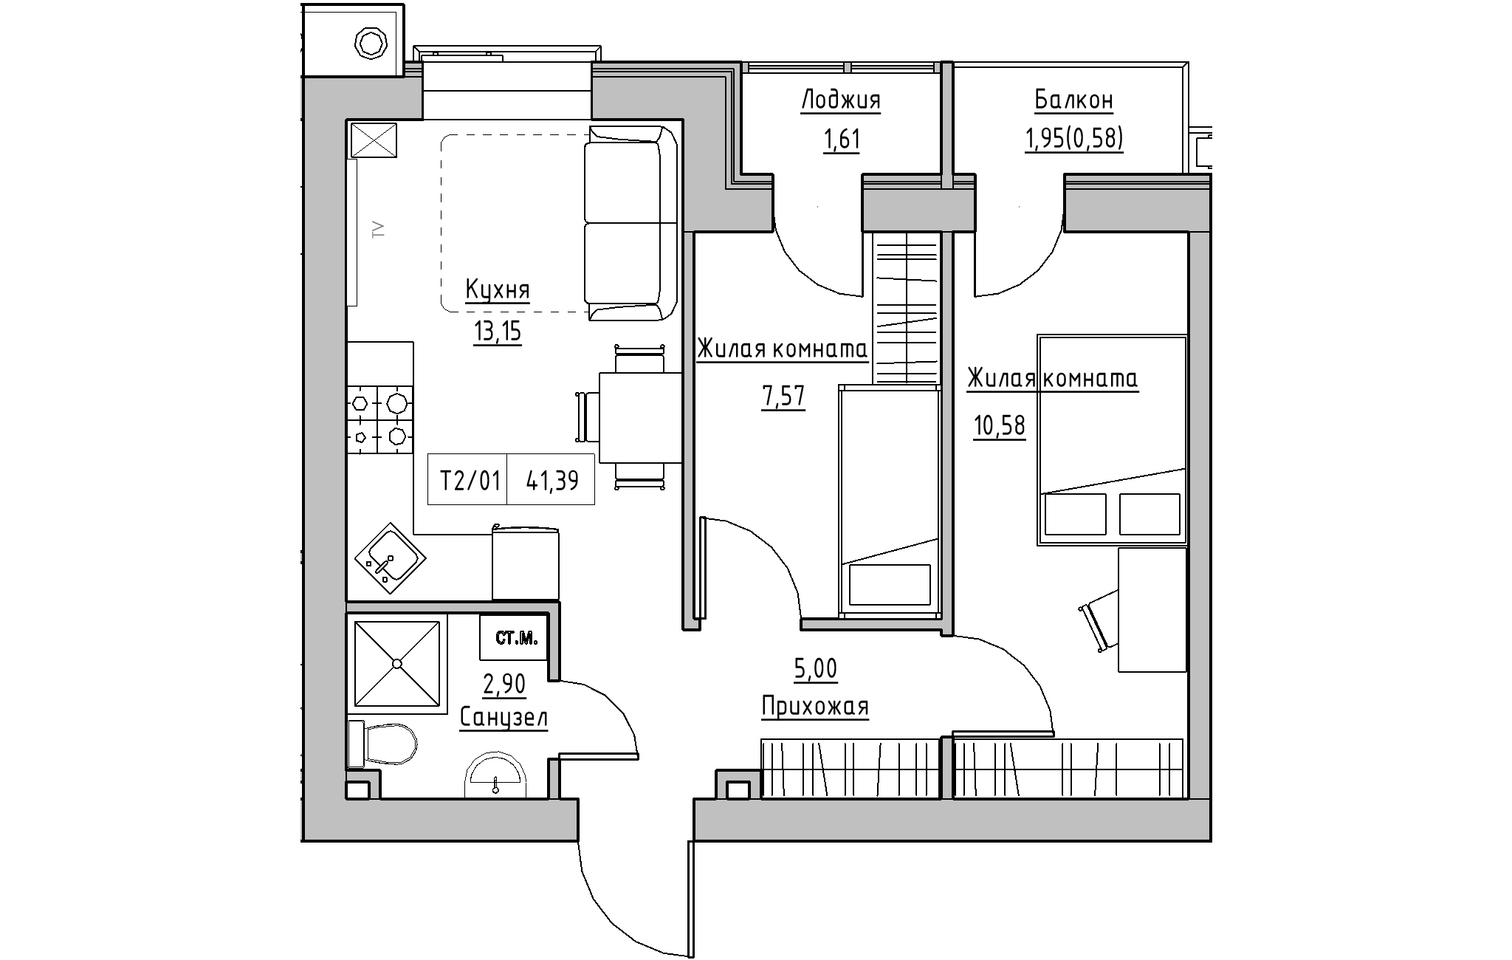 Planning 2-rm flats area 41.39m2, KS-013-03/0009.